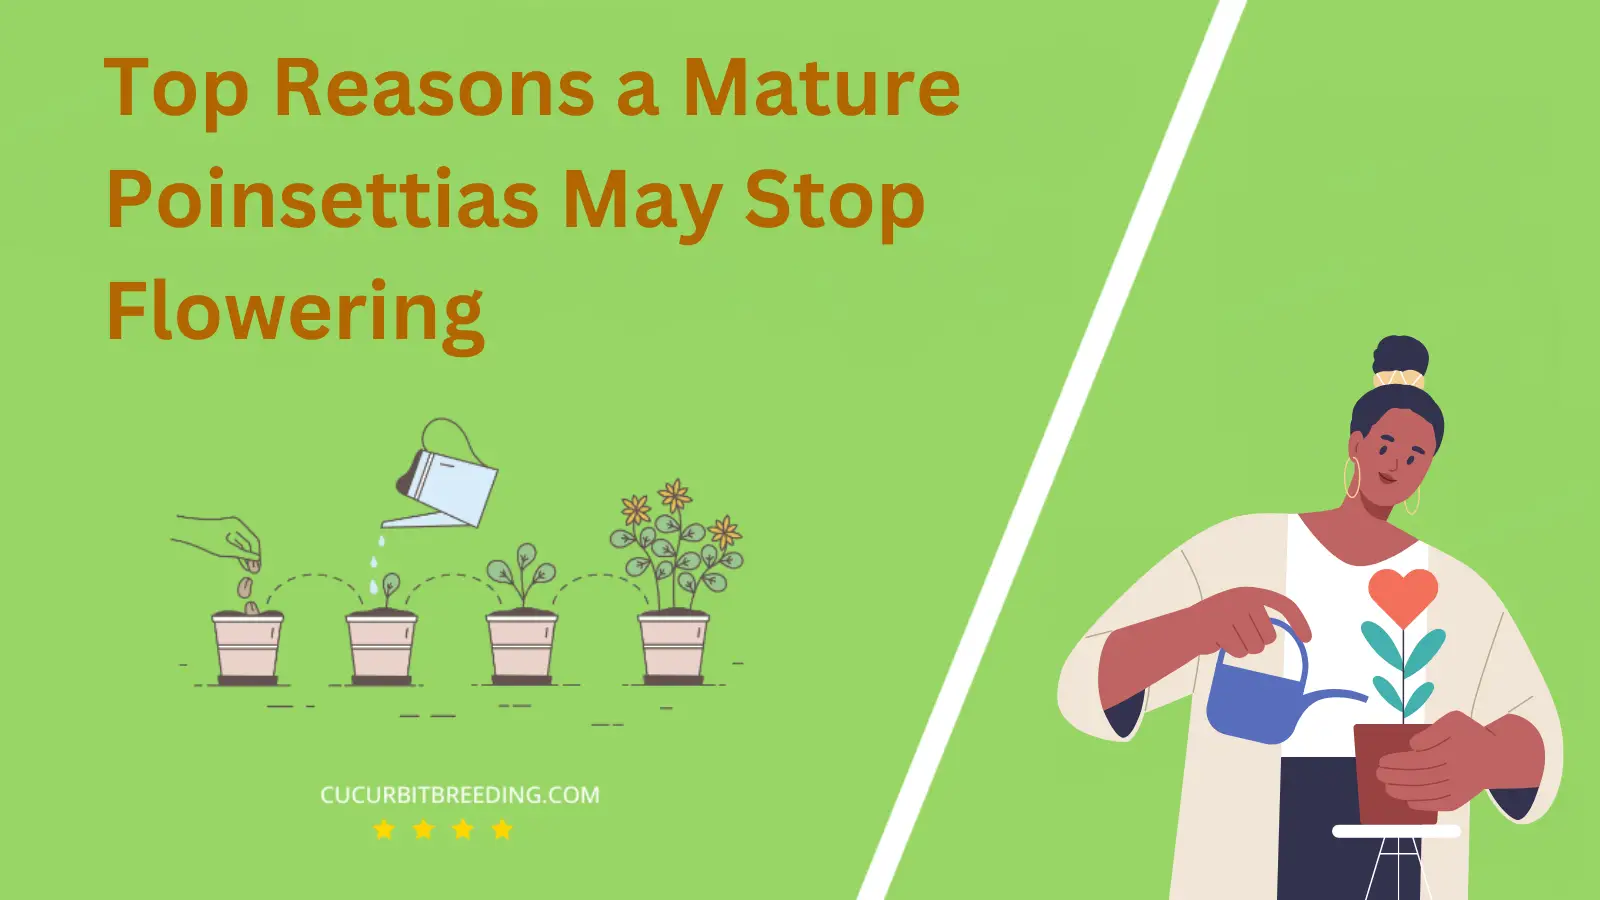 Top Reasons a Mature Poinsettias May Stop Flowering